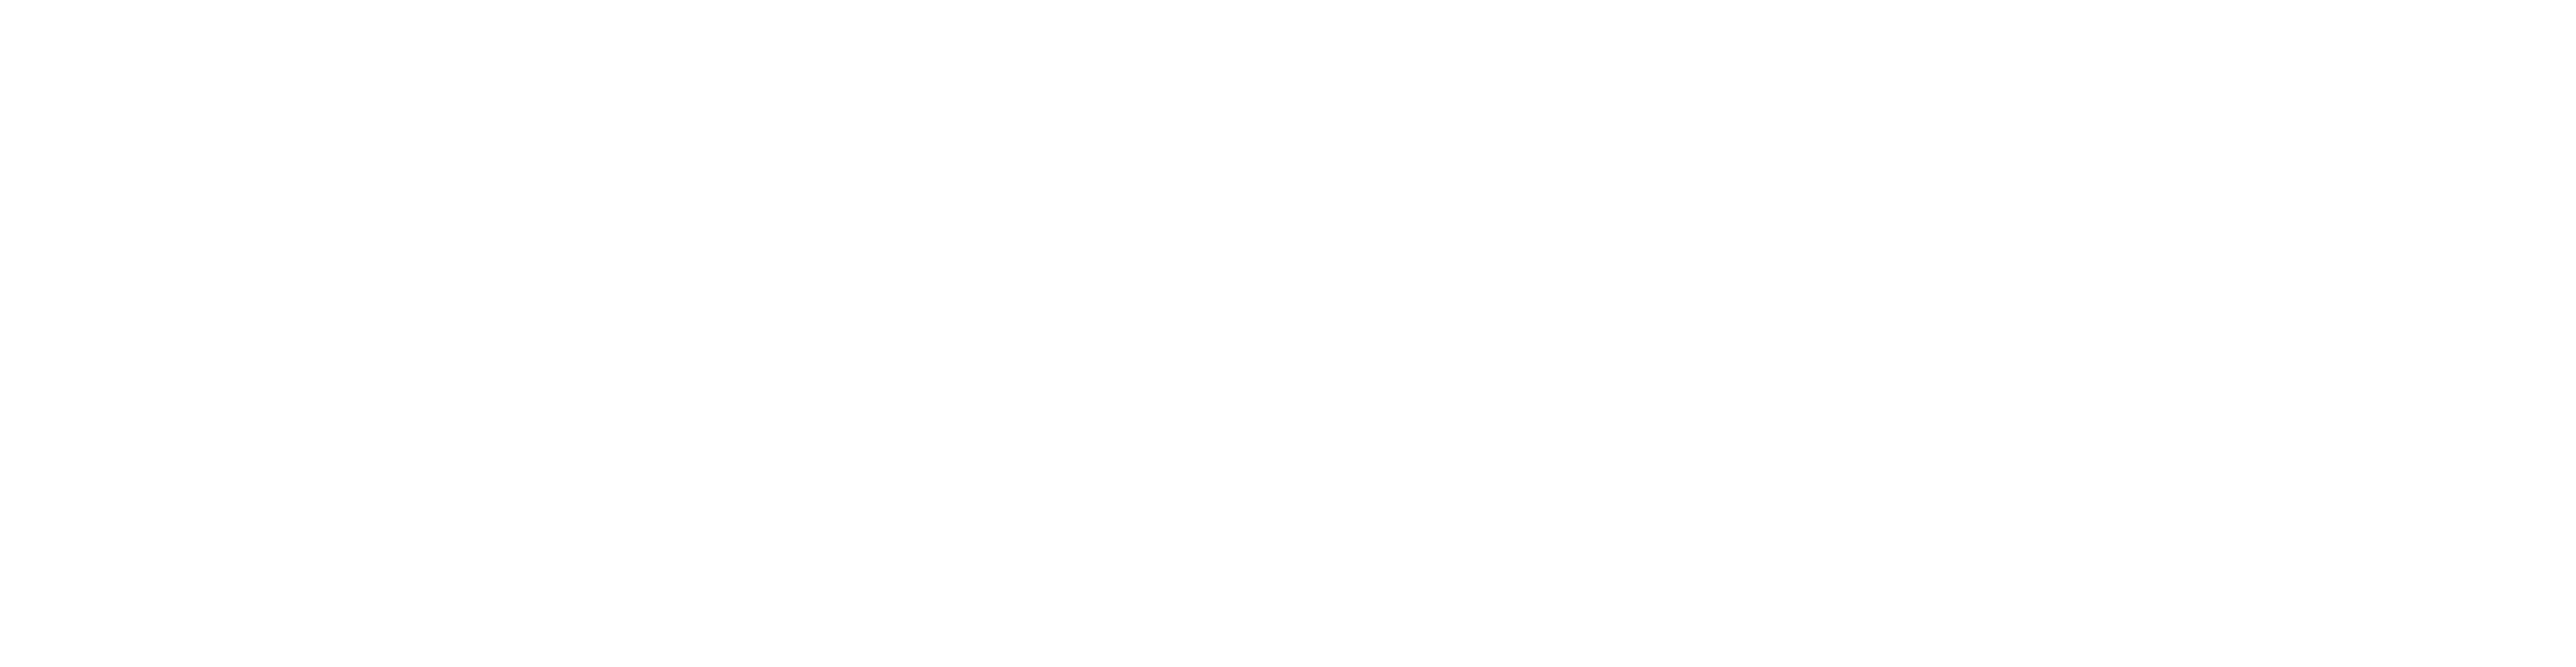 Perception Neuron 3 Motion Capture White Logo